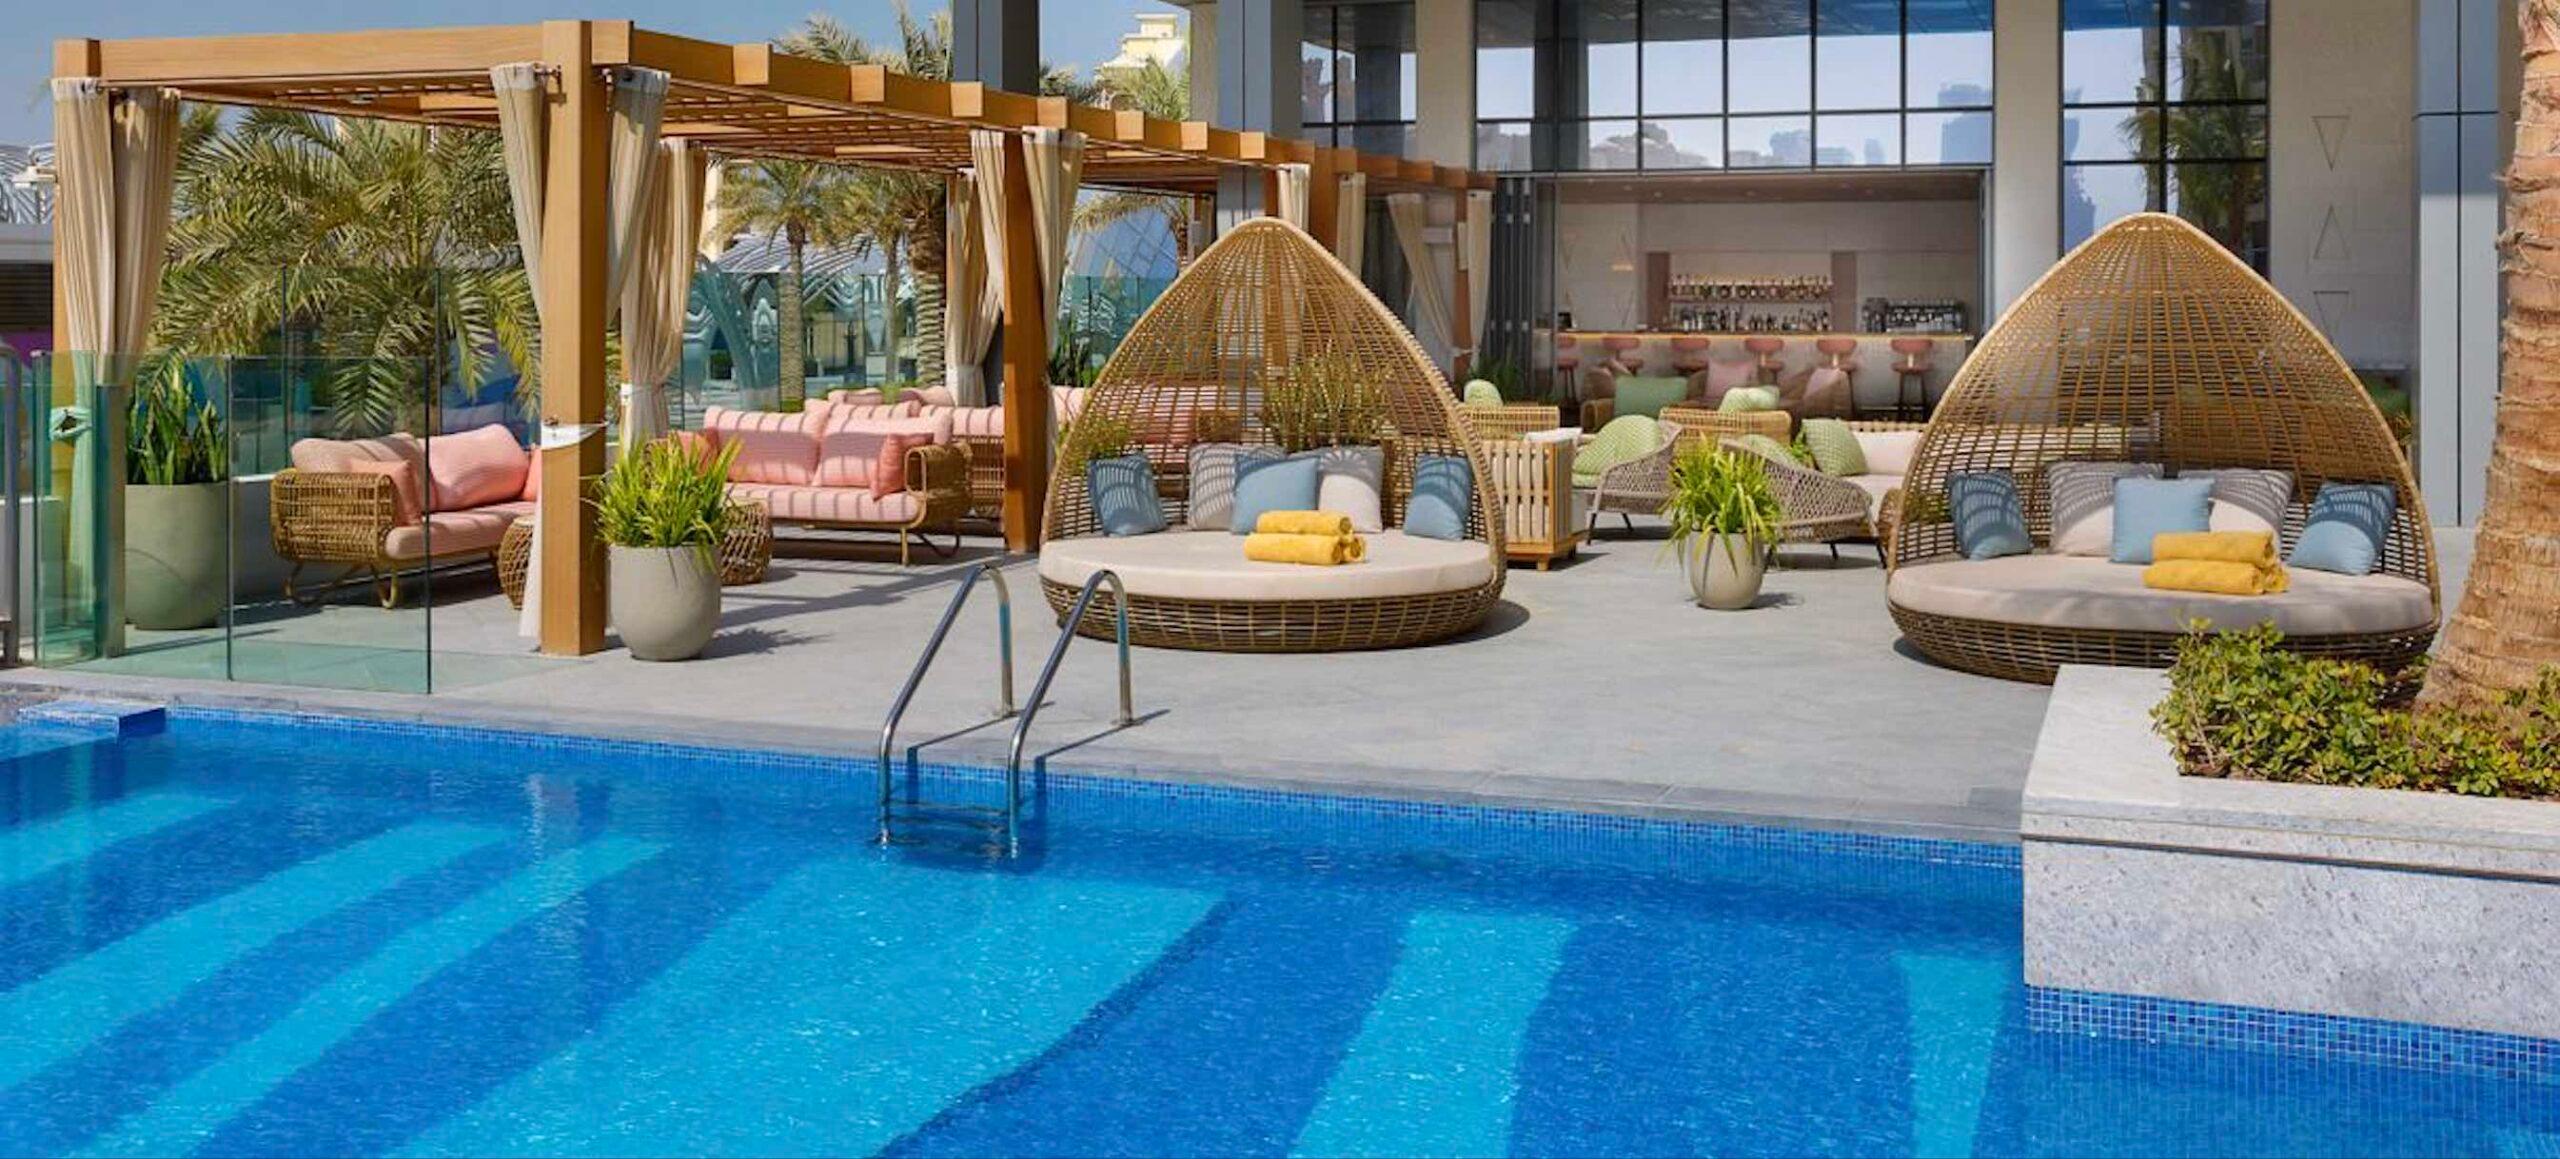 Hotel Hotspot: The St. Regis Dubai, The Palm